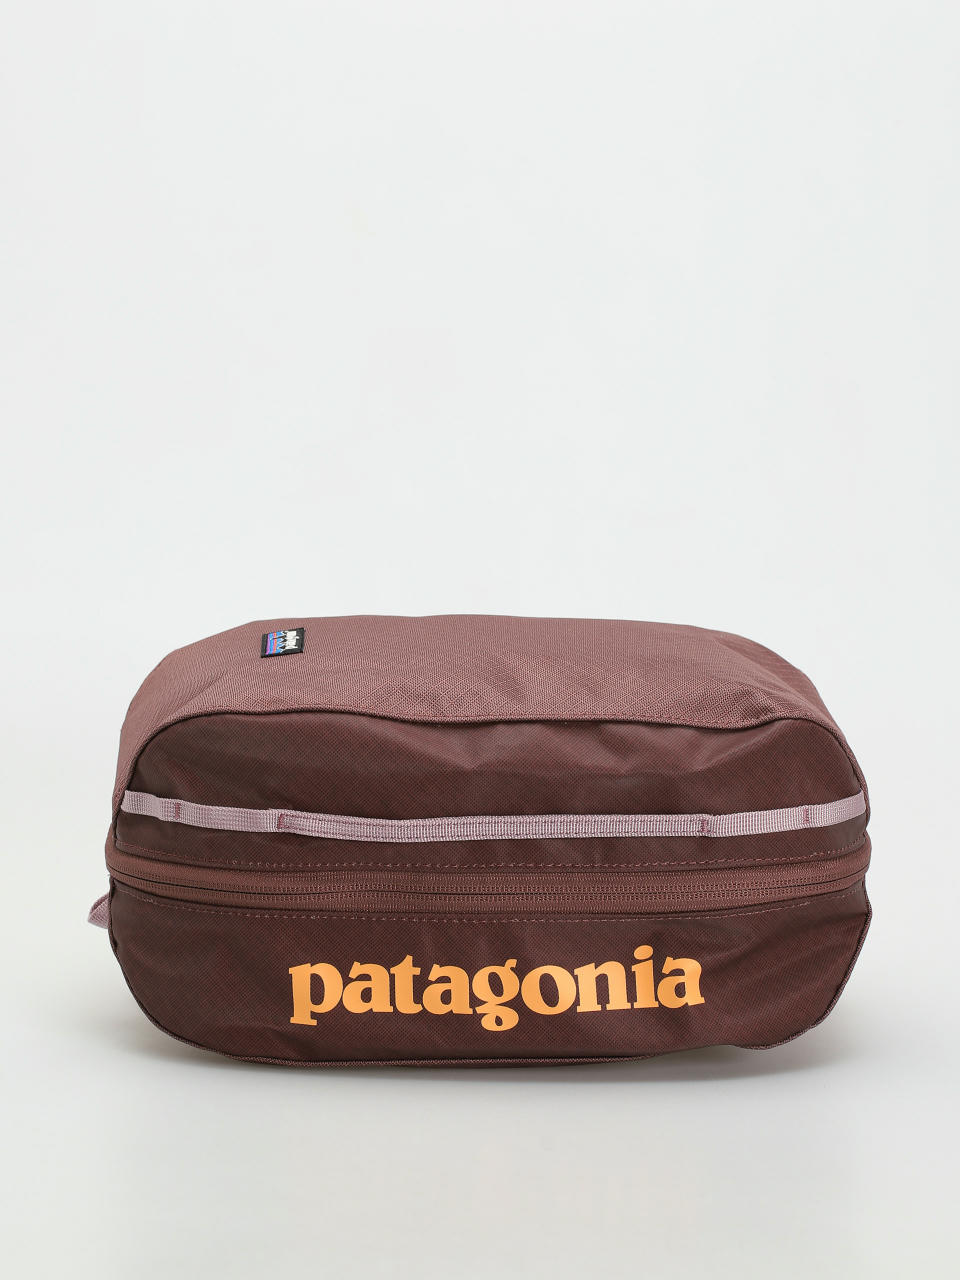 Patagonia Cosmetic bag Black Hole Cube 6L (dulse mauve)